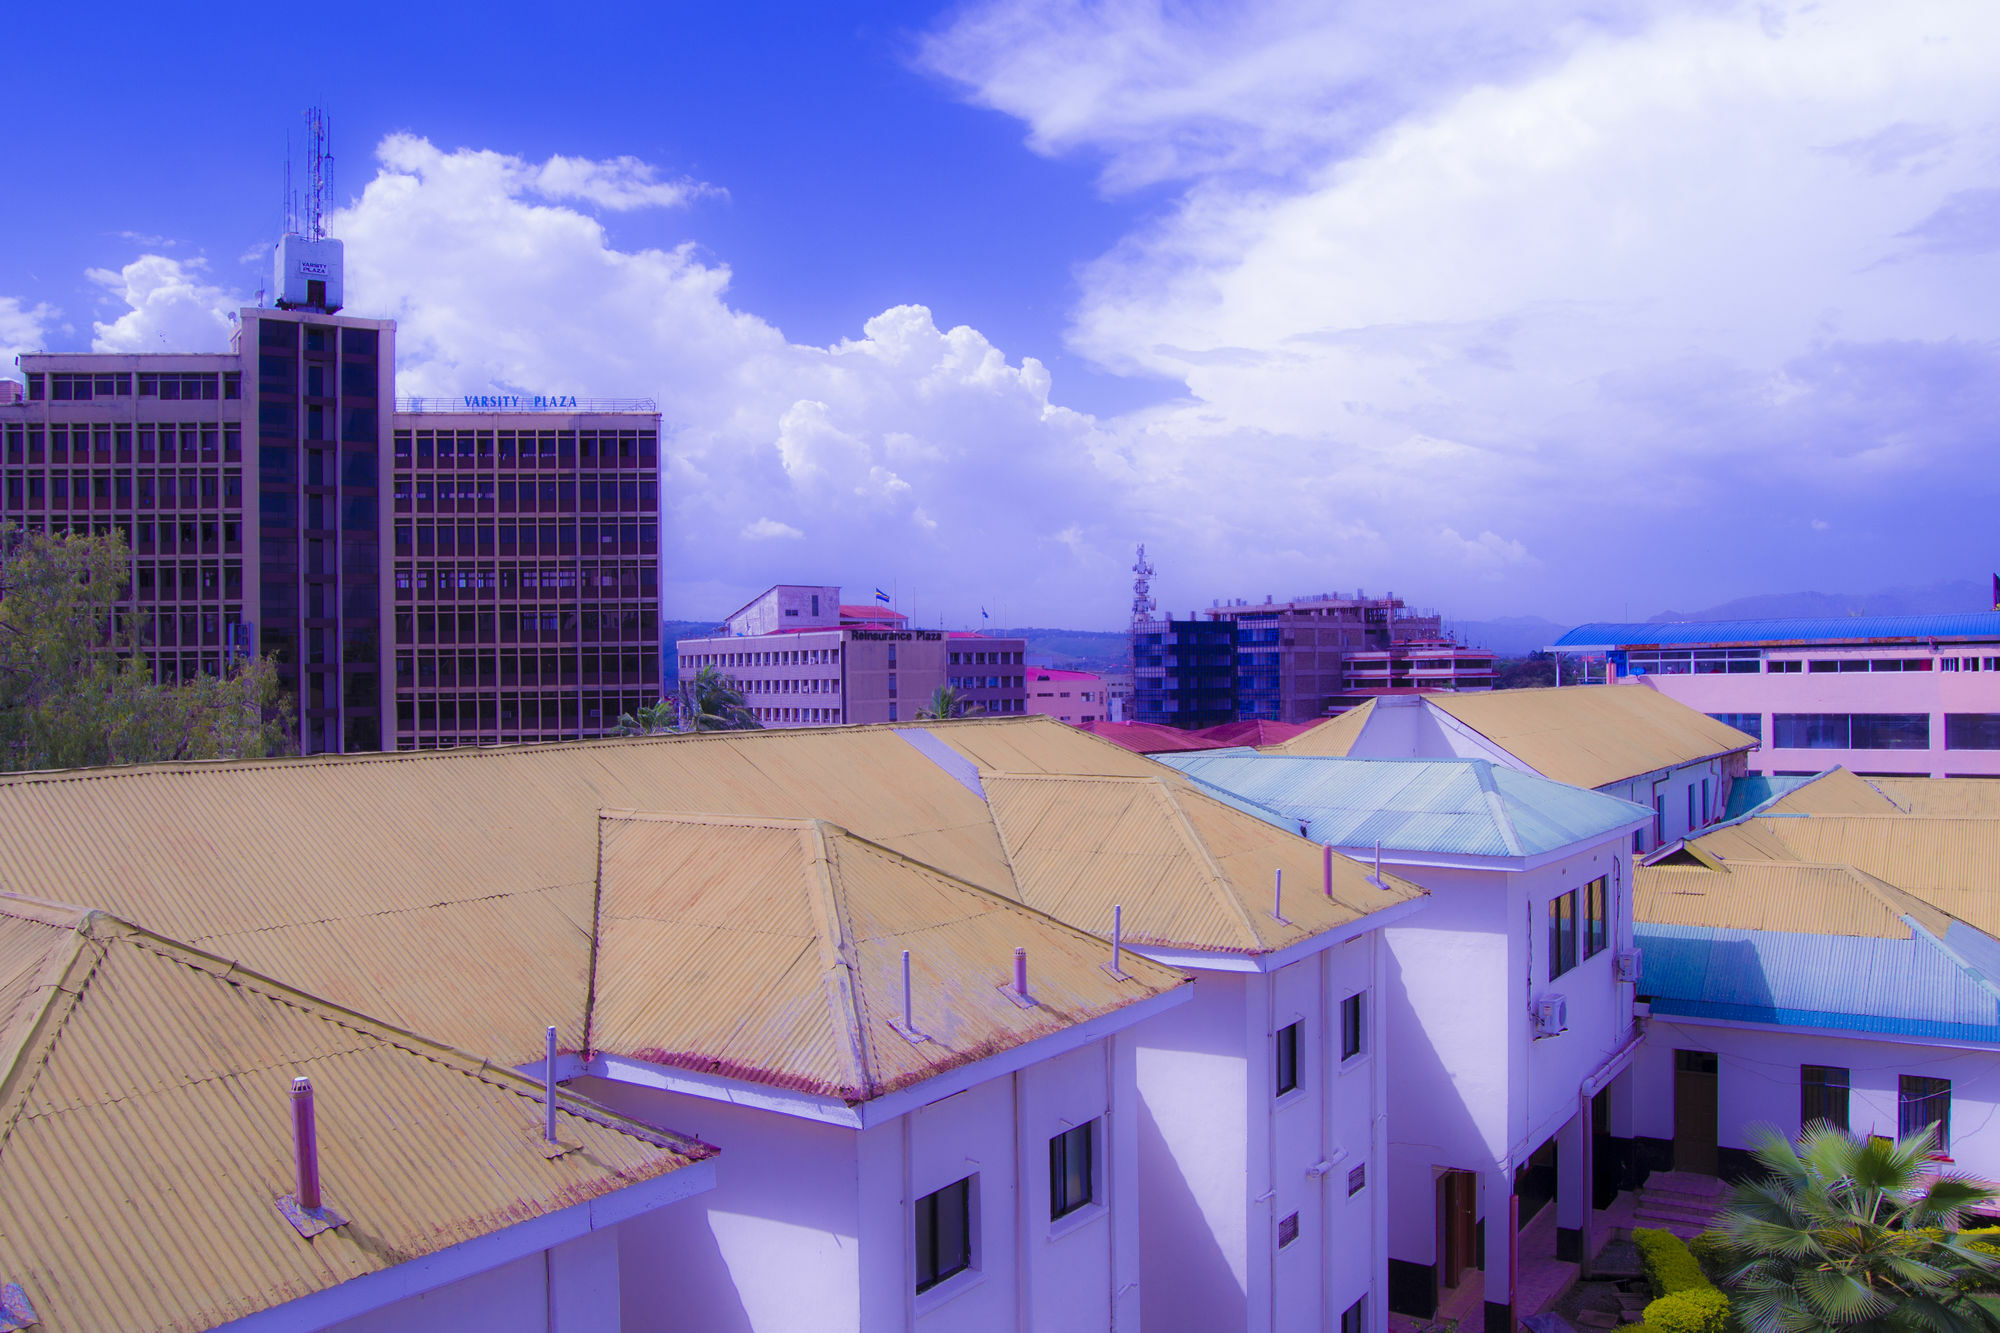 Kisumu Hotel Exterior photo